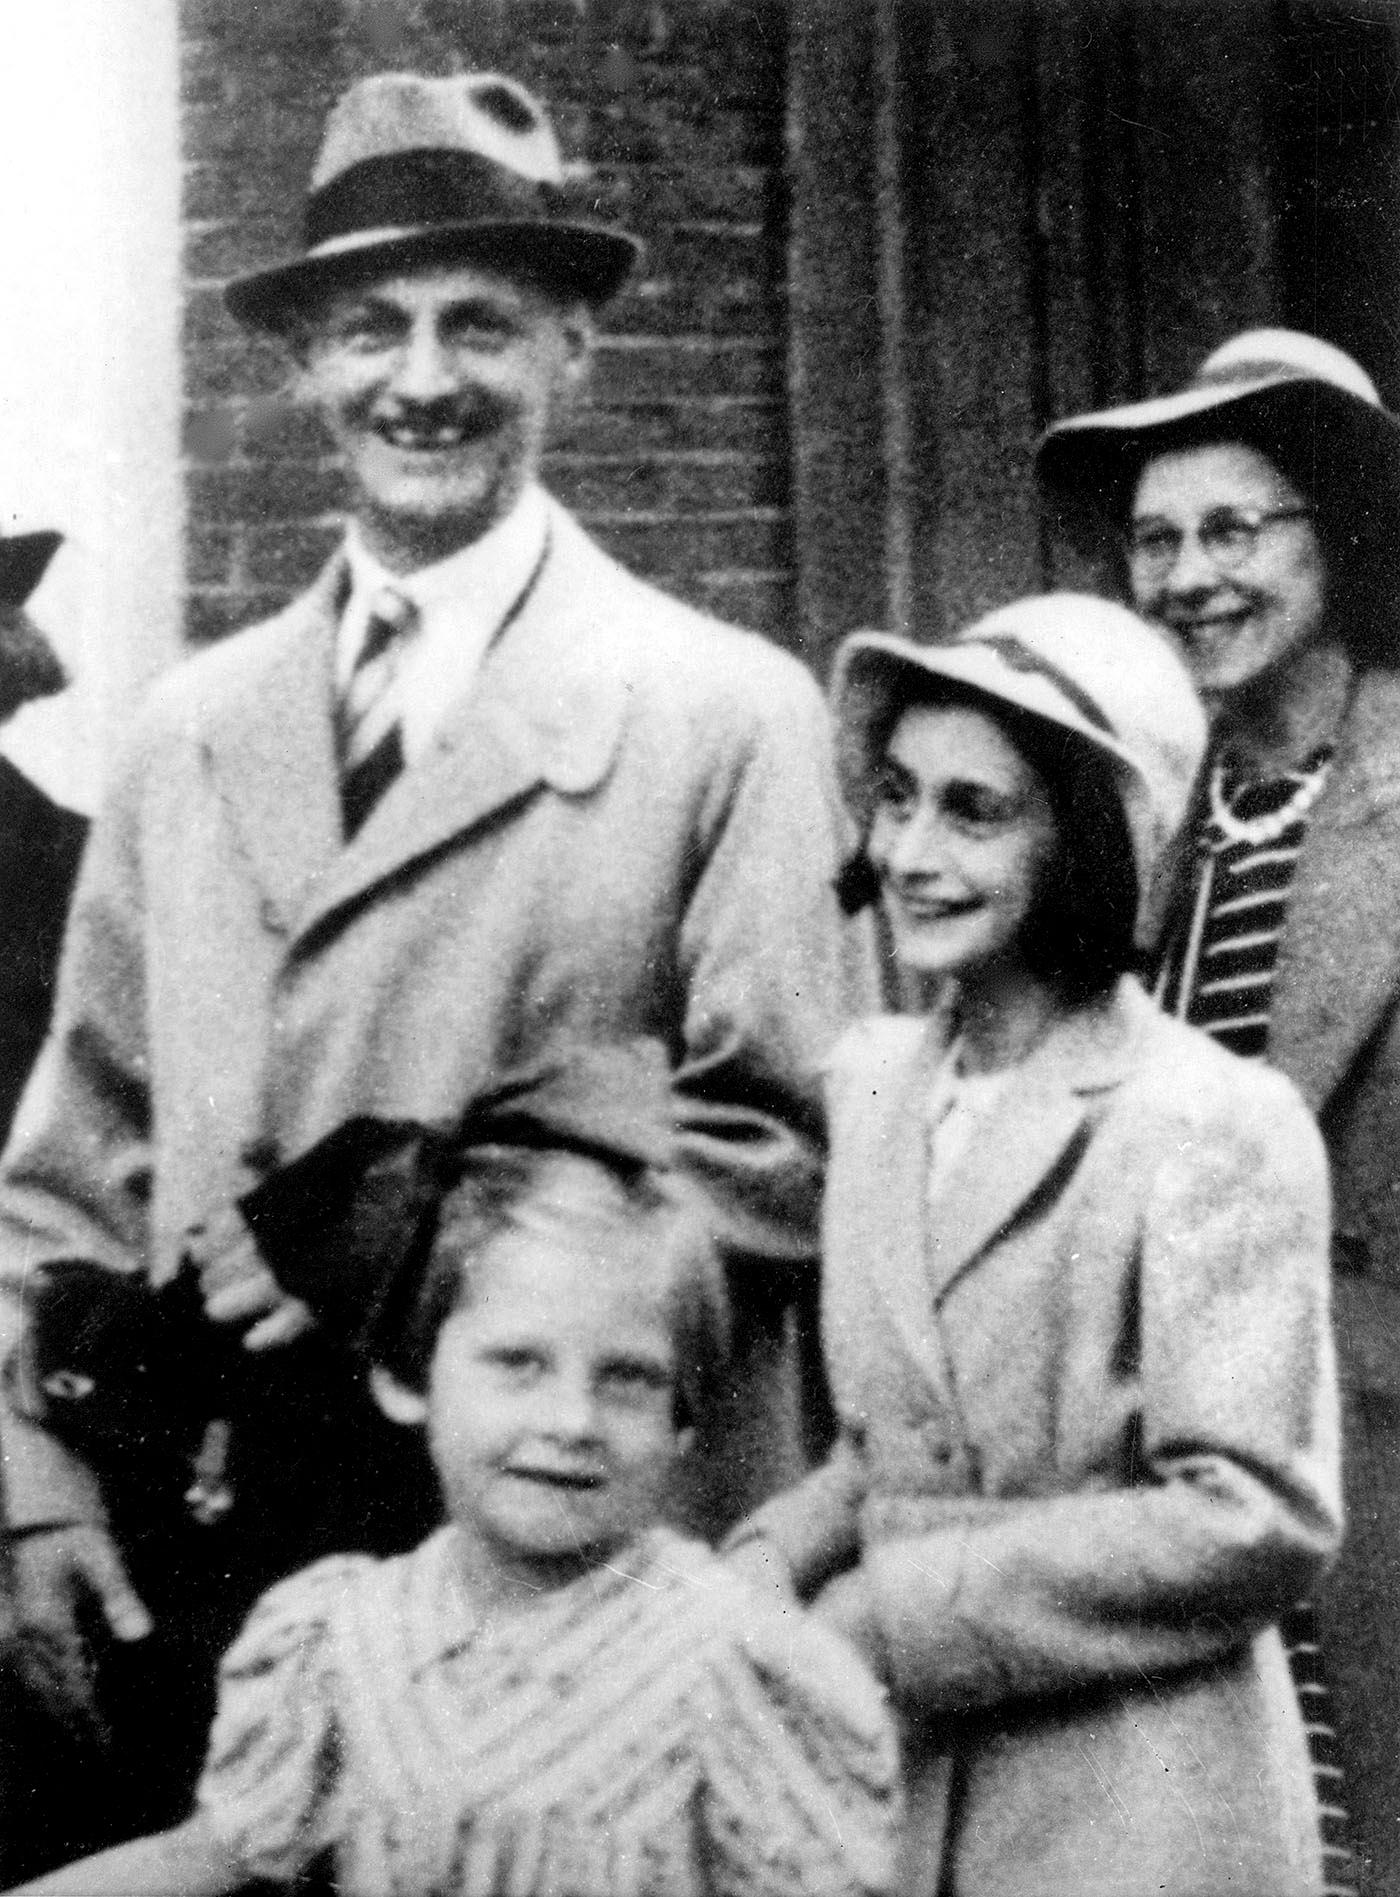 Anne Franks pappa Otto Frank var den ende familjemedlemmen som överlevde kriget.